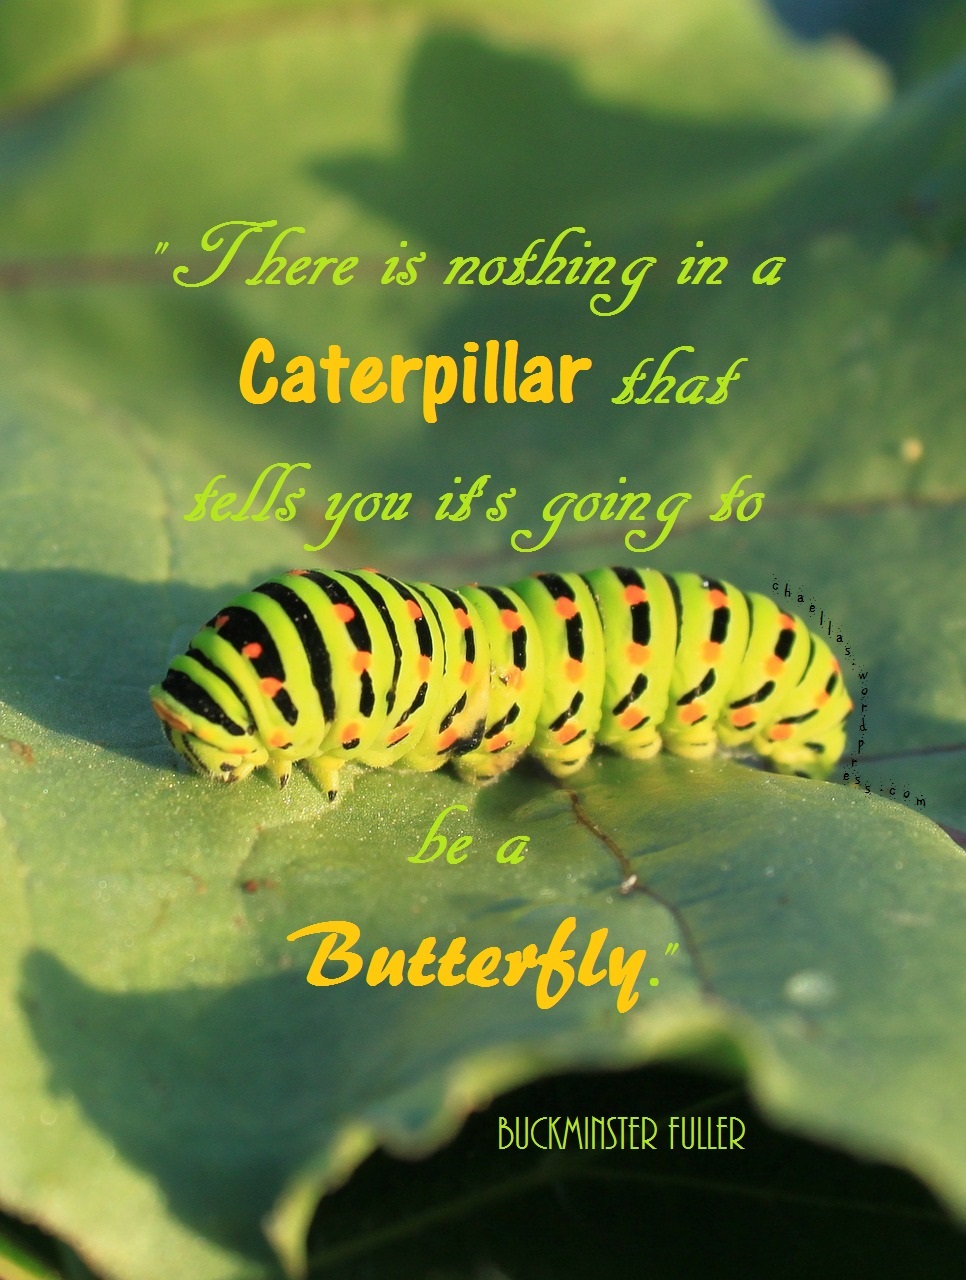 caterpillar-lepidoptera-papilionidae-buckminster-fuller-quote-chaellas-wordpress-com-12801